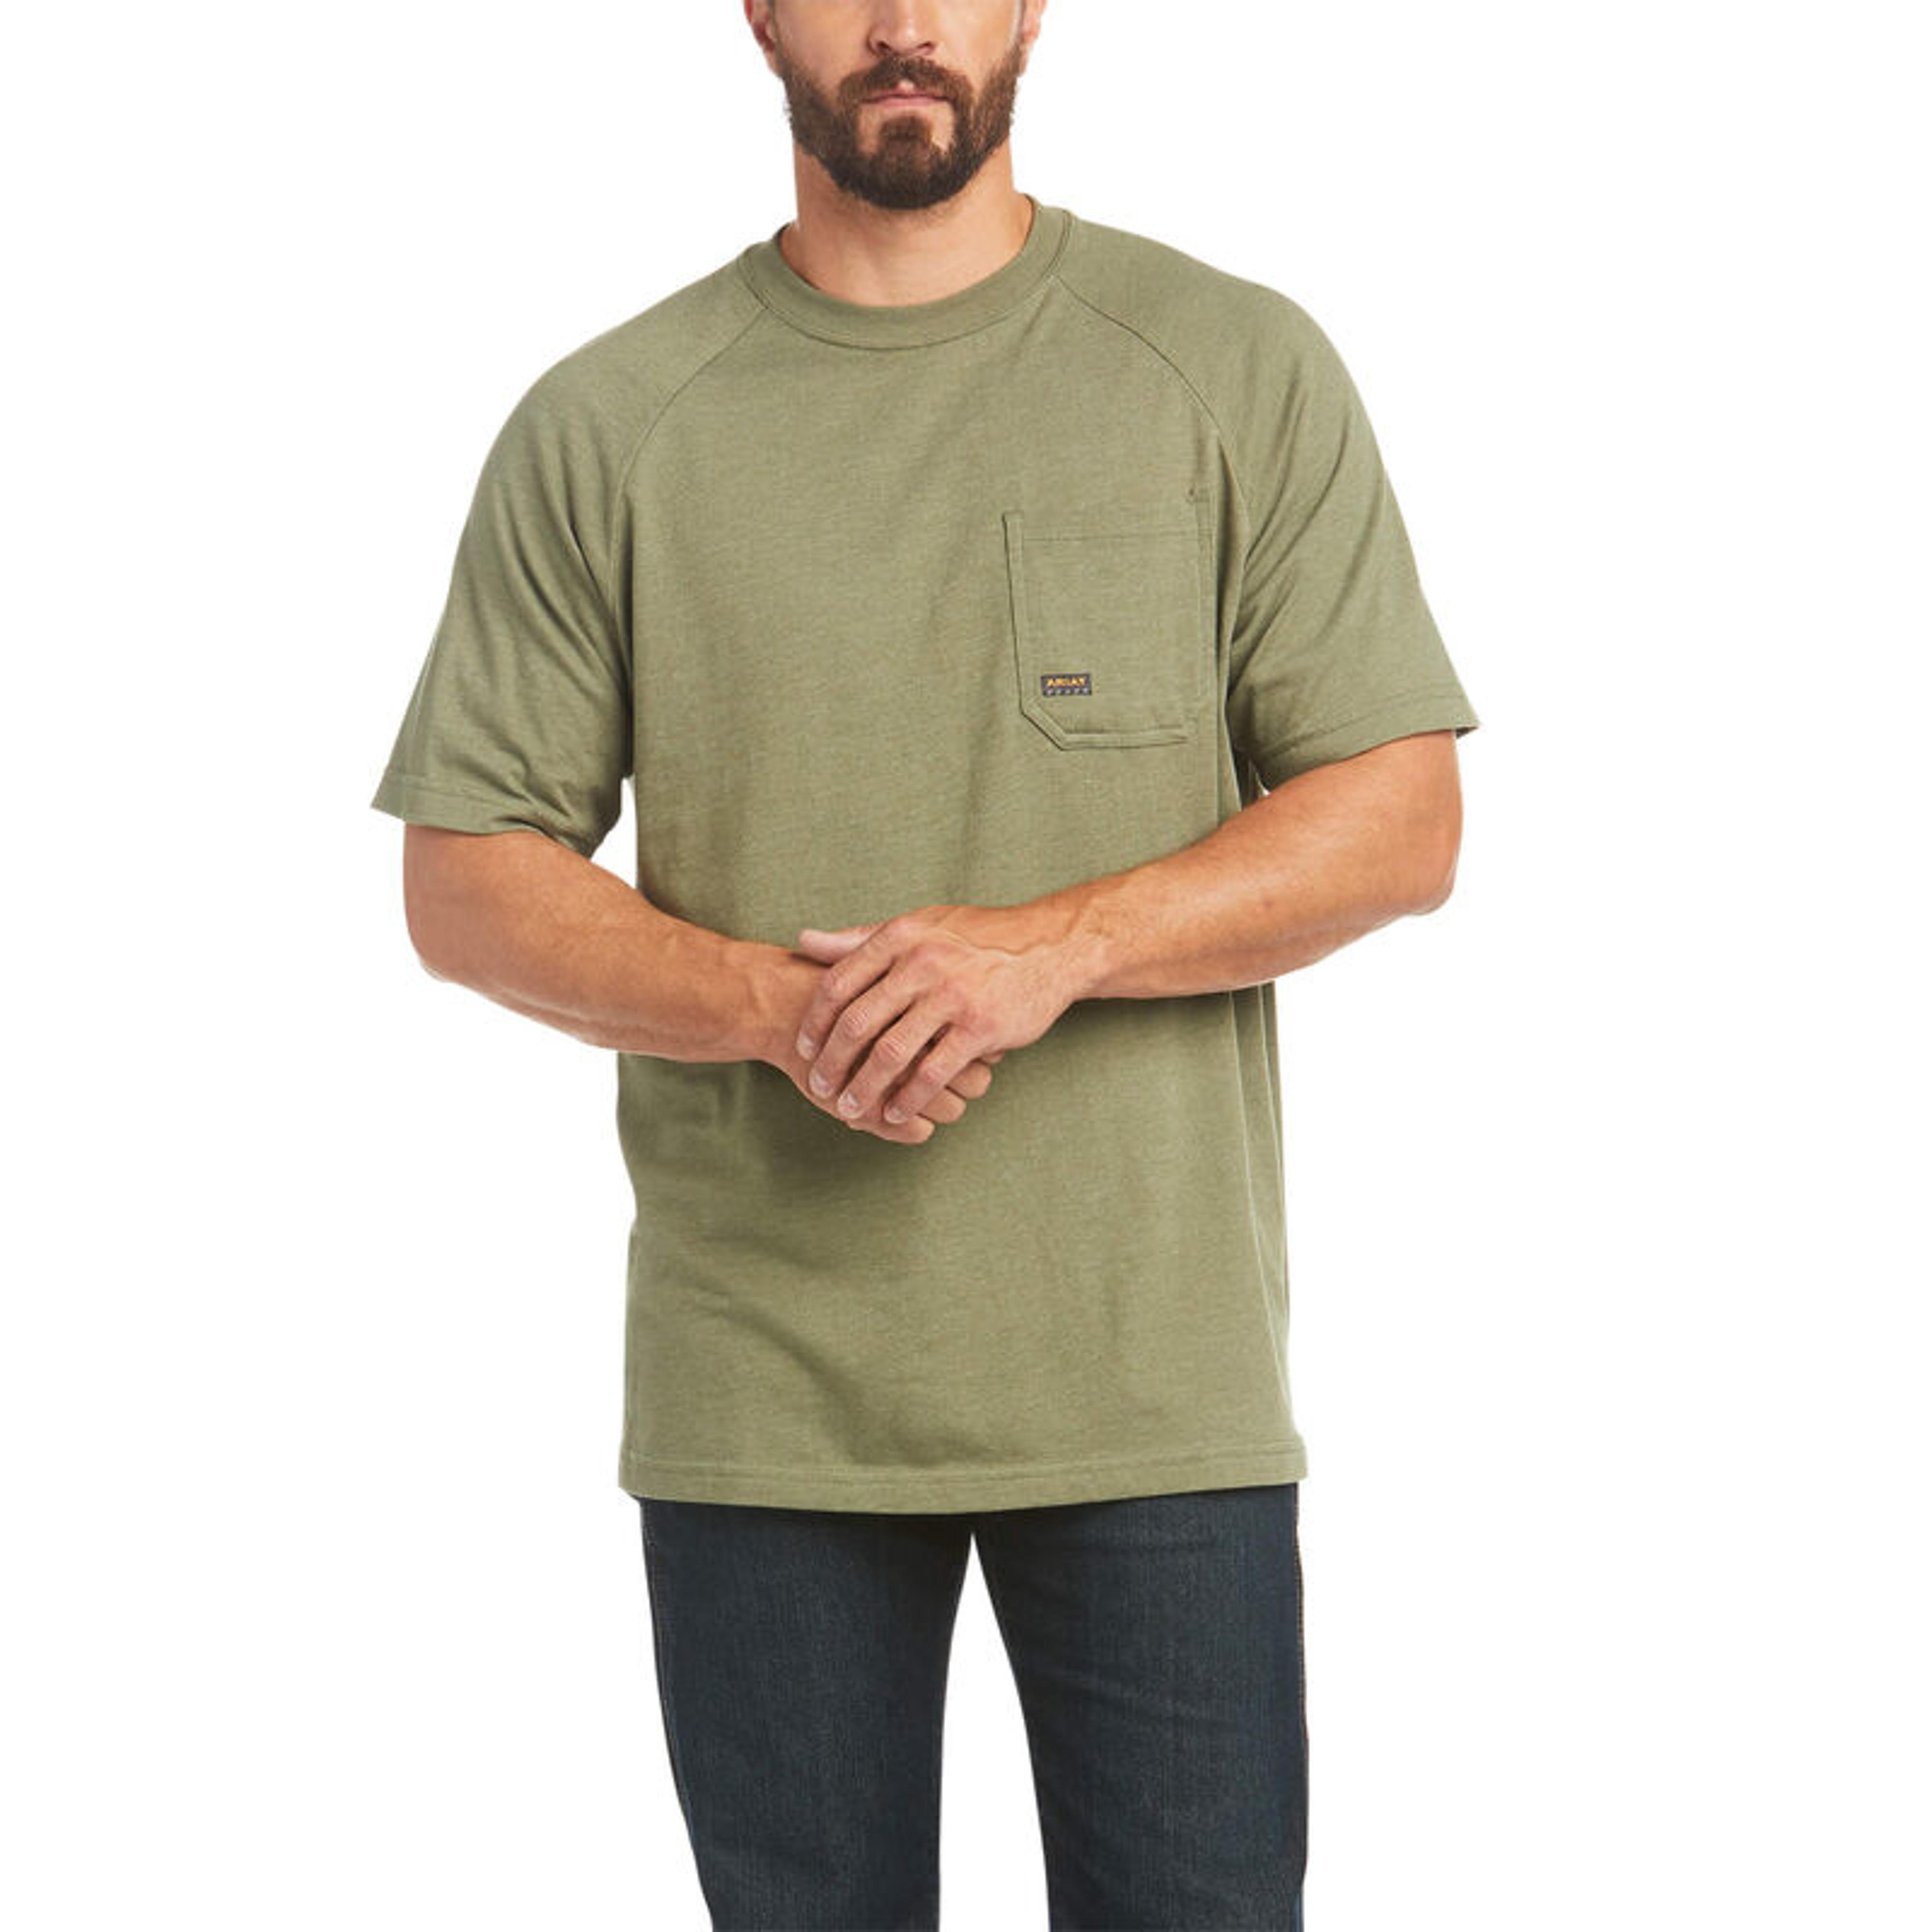  Rebar Cotton Strong T- Shirt